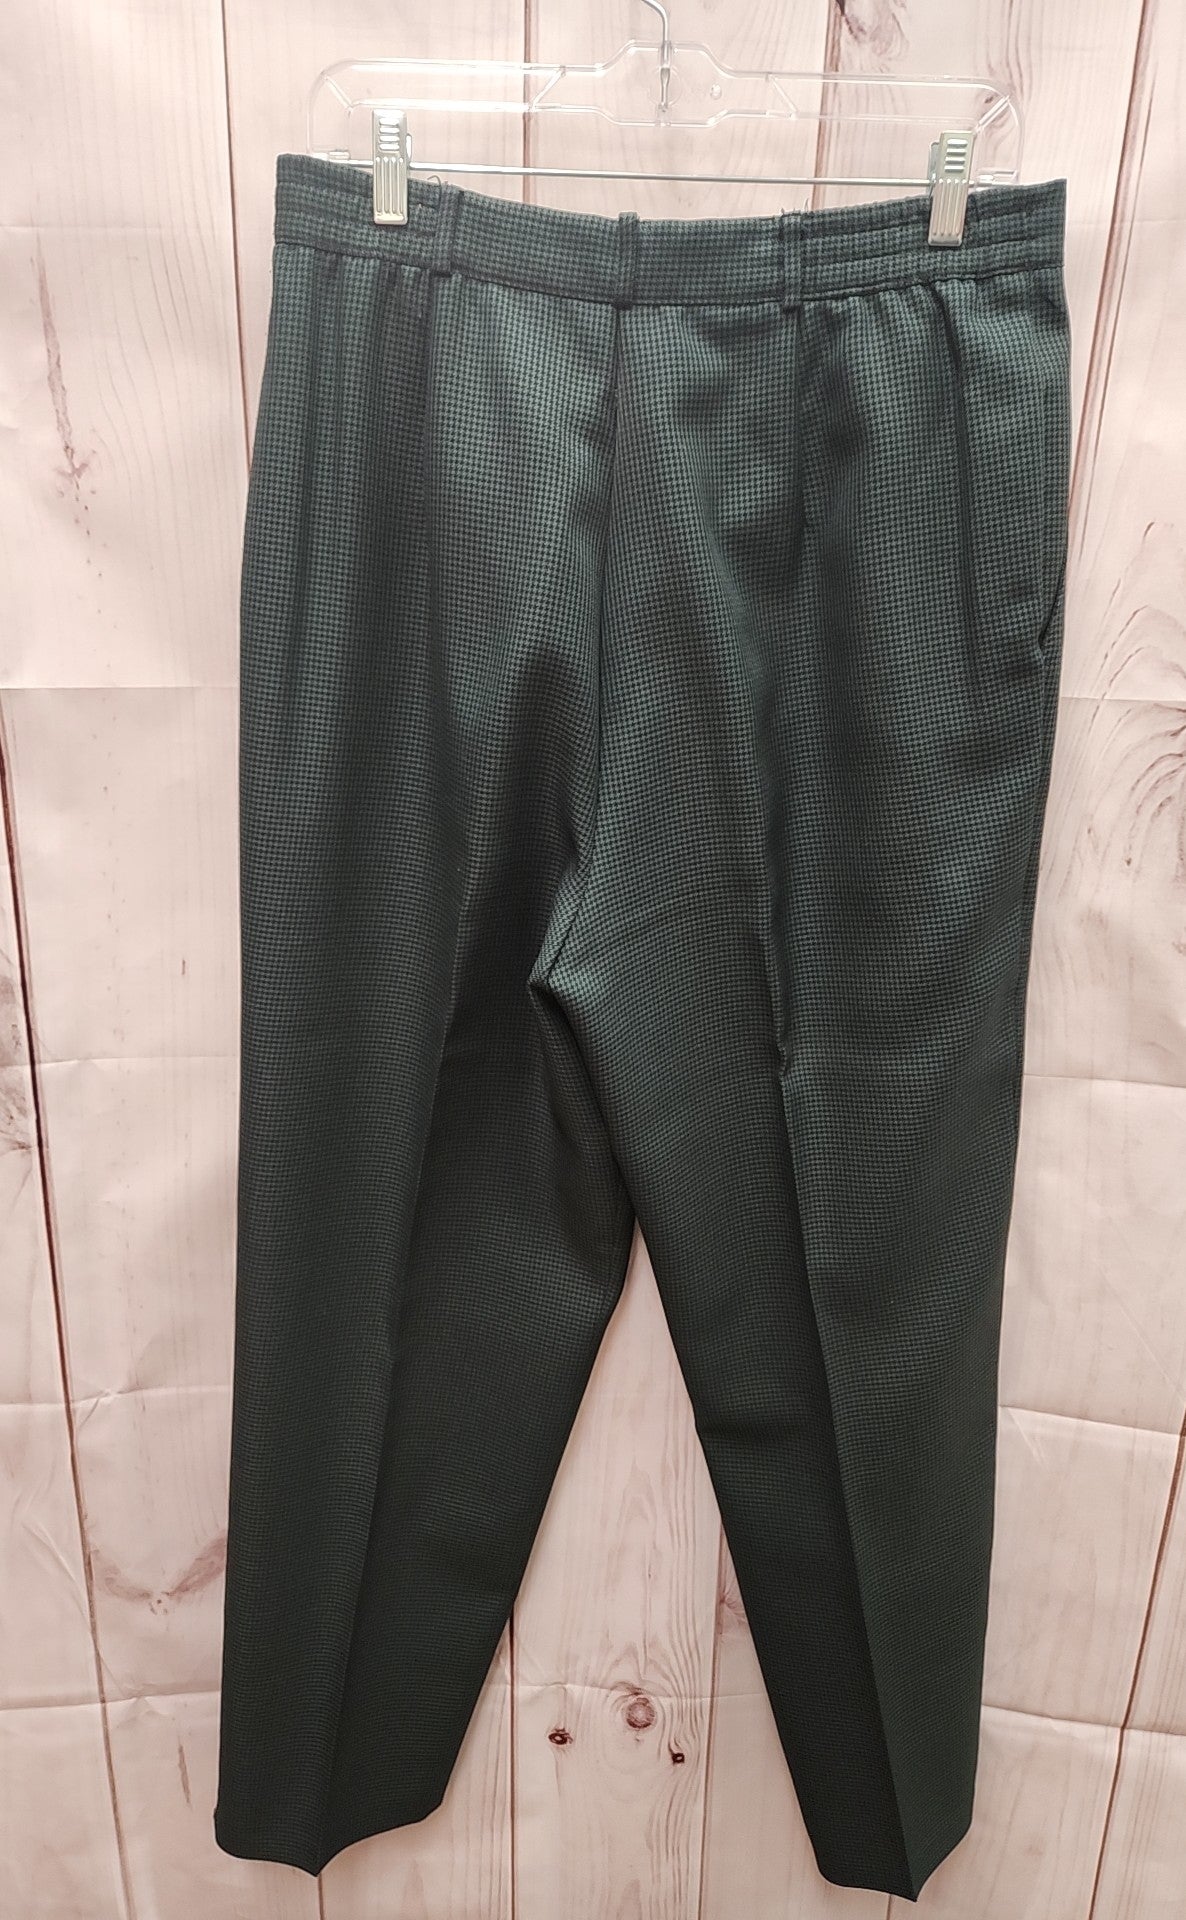 Fundamentals Women's Size 14 Green Pants